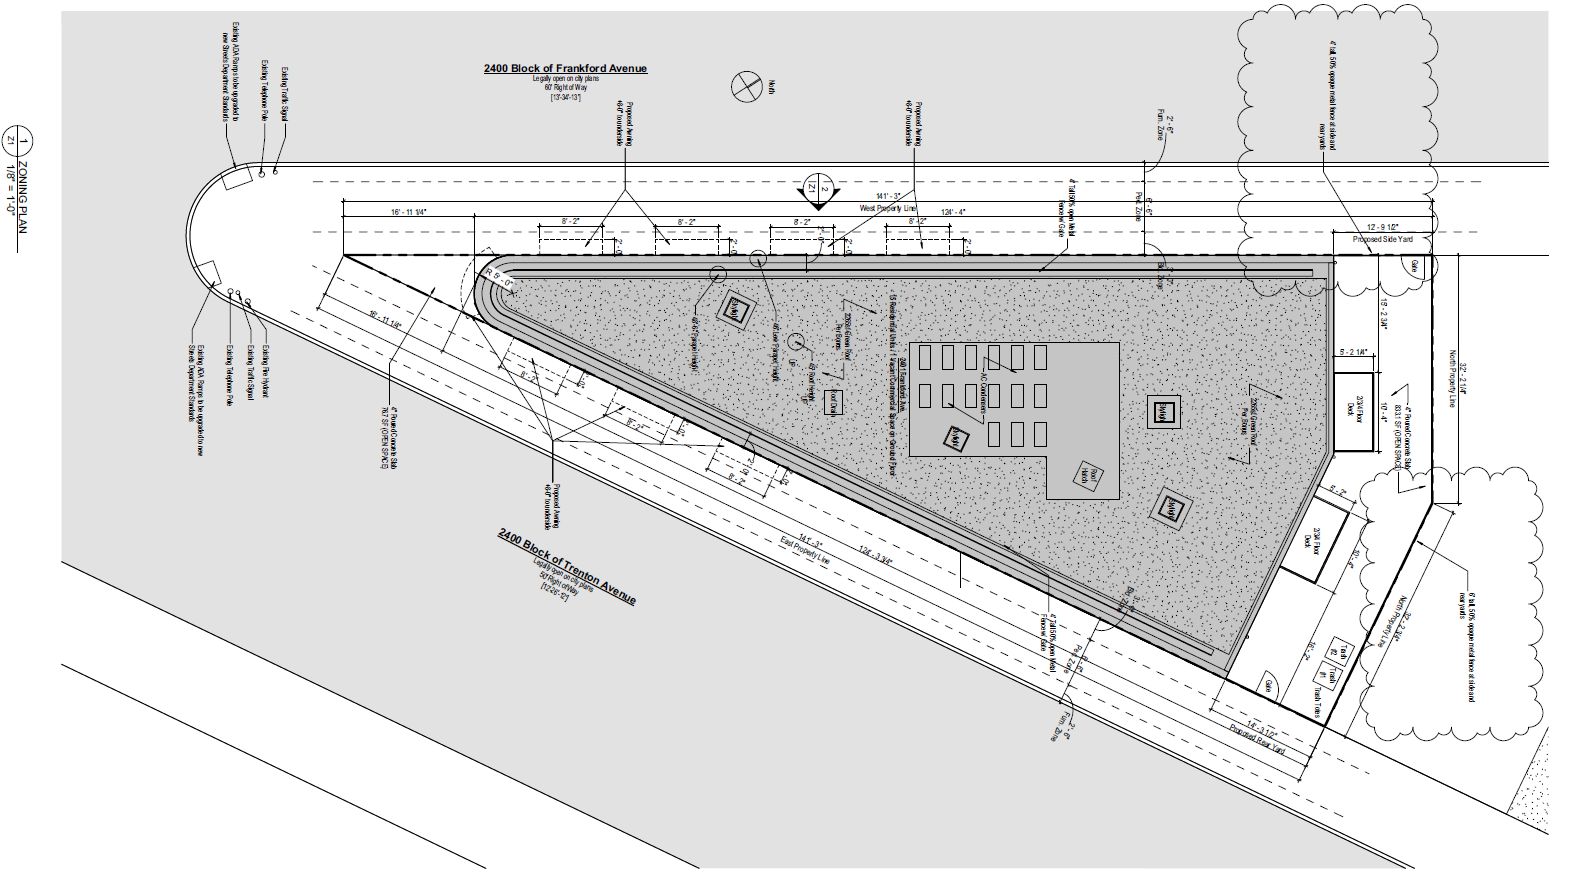 2401 Frankford Avenue. Site plan. Credit: Ambit Architecture via the City of Philadelphia